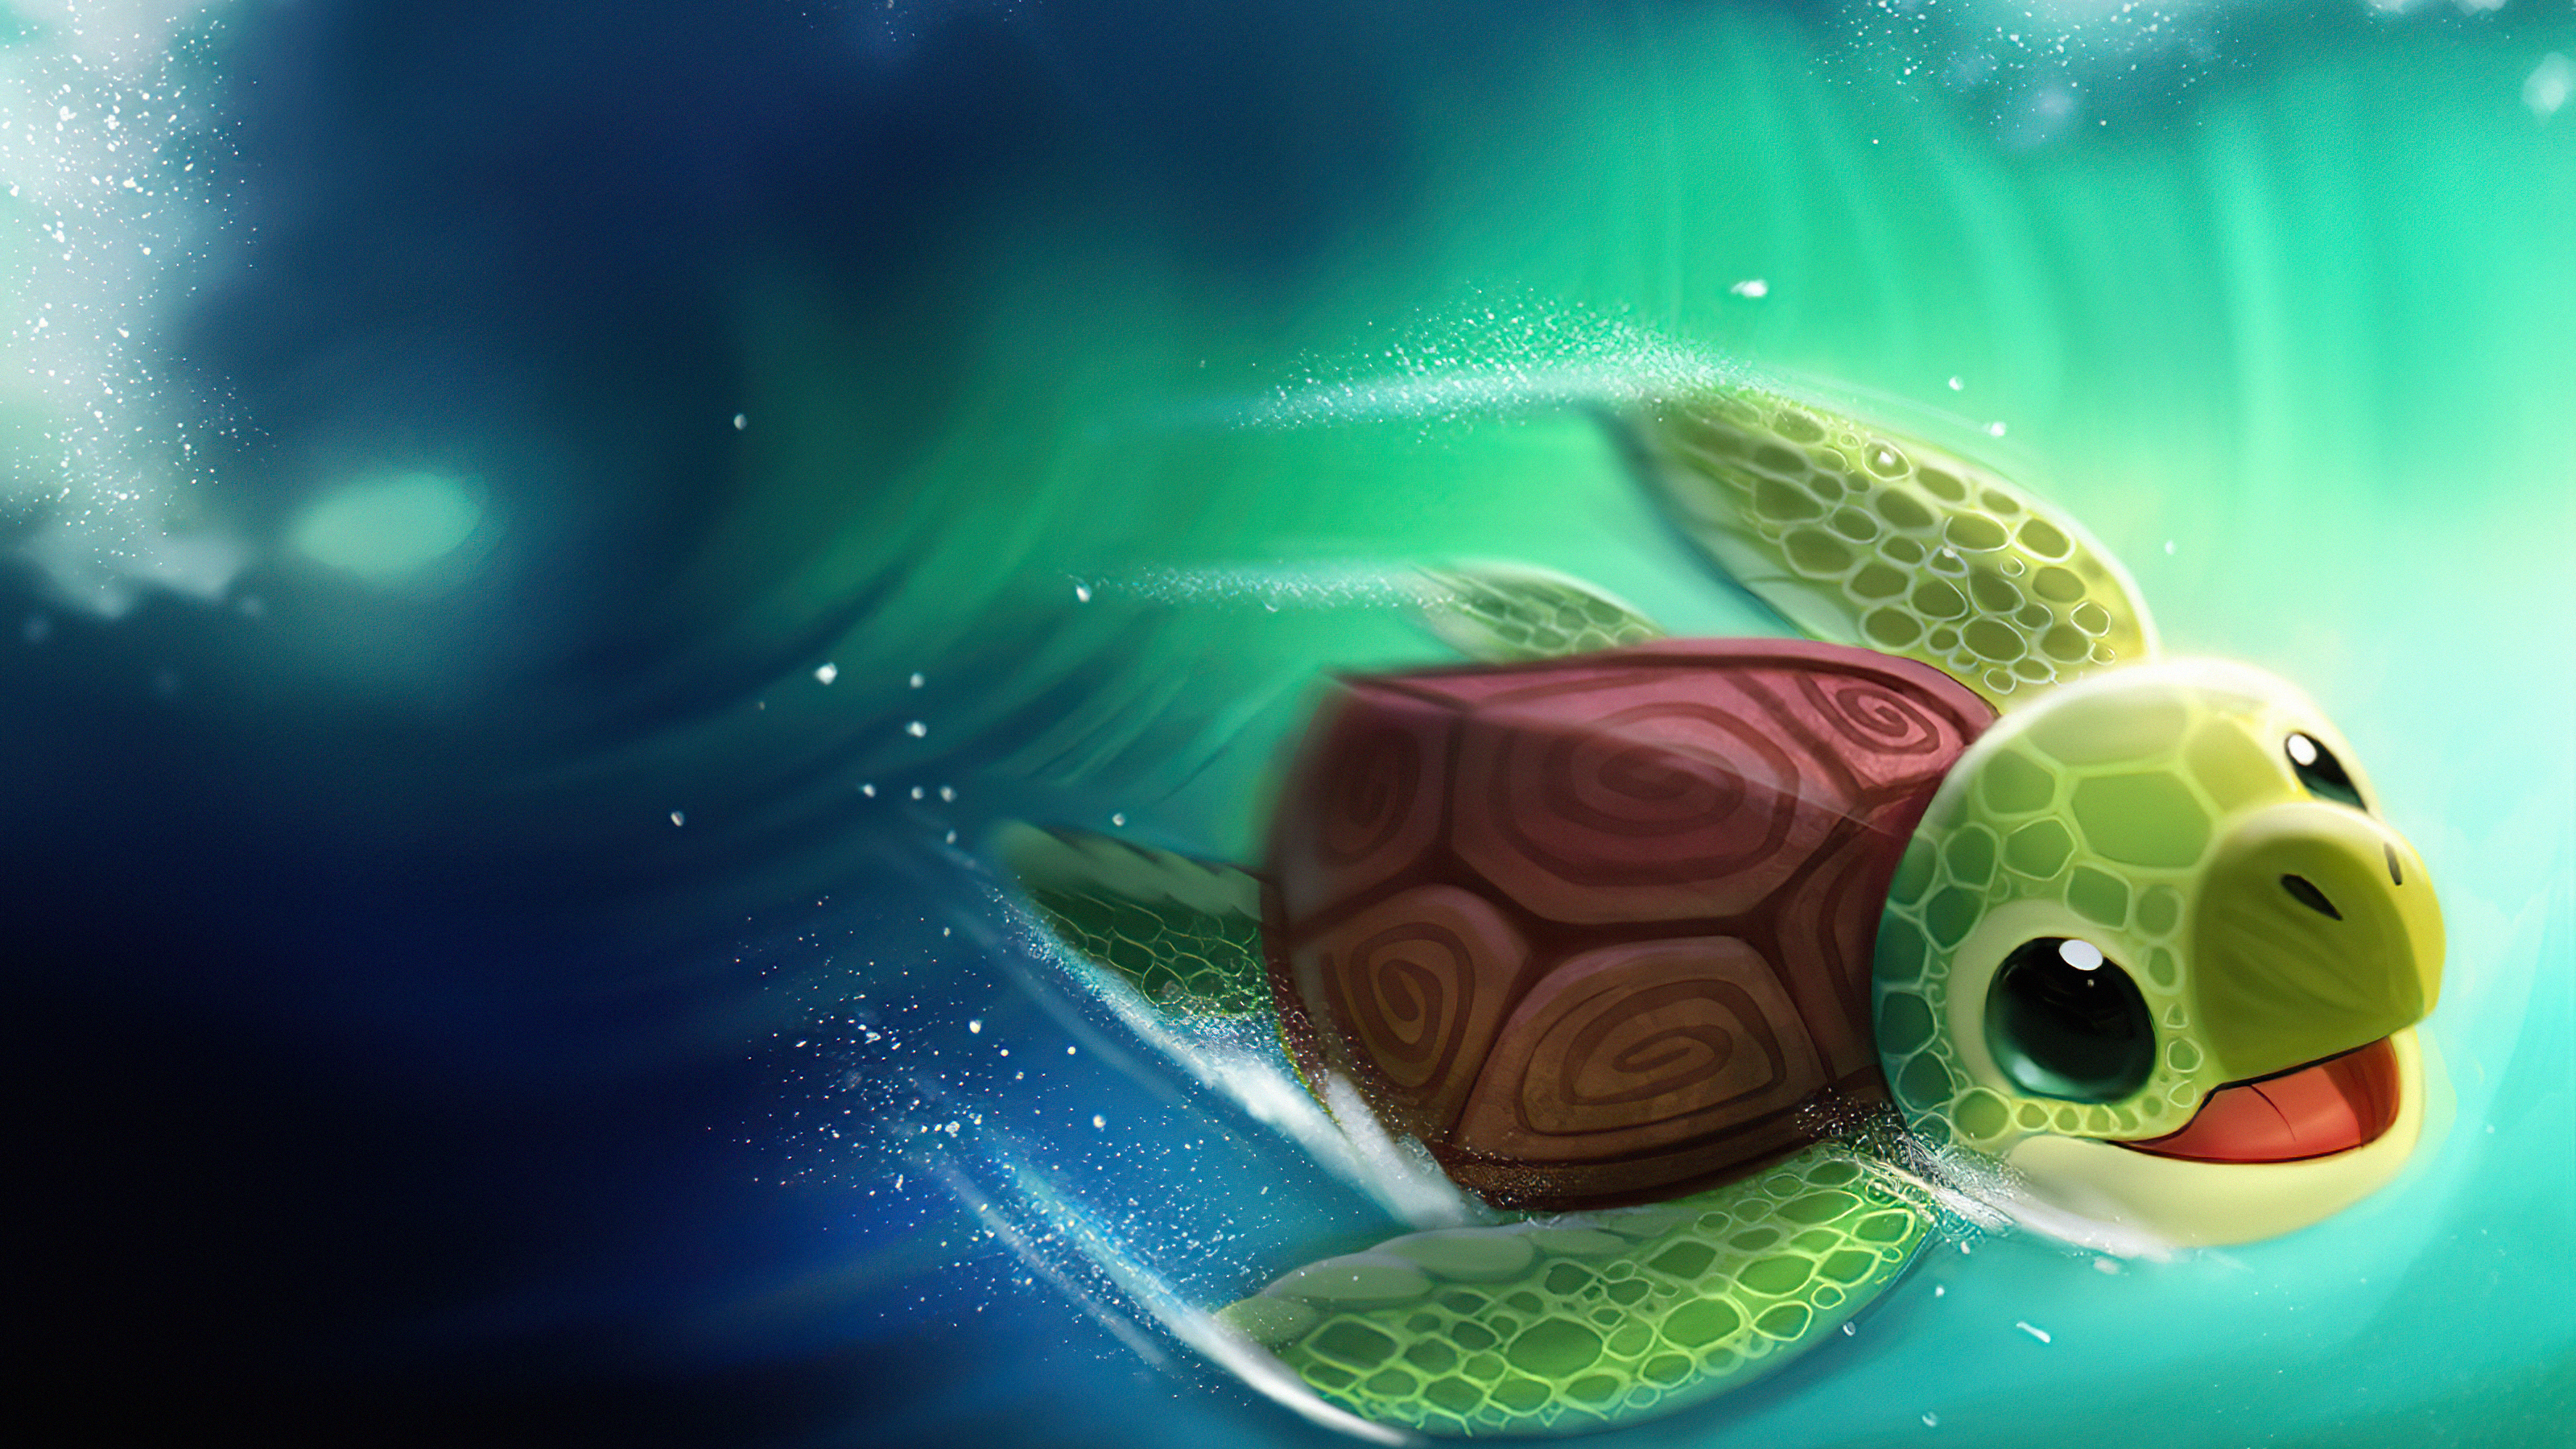 Sea Turtle Desktop Background